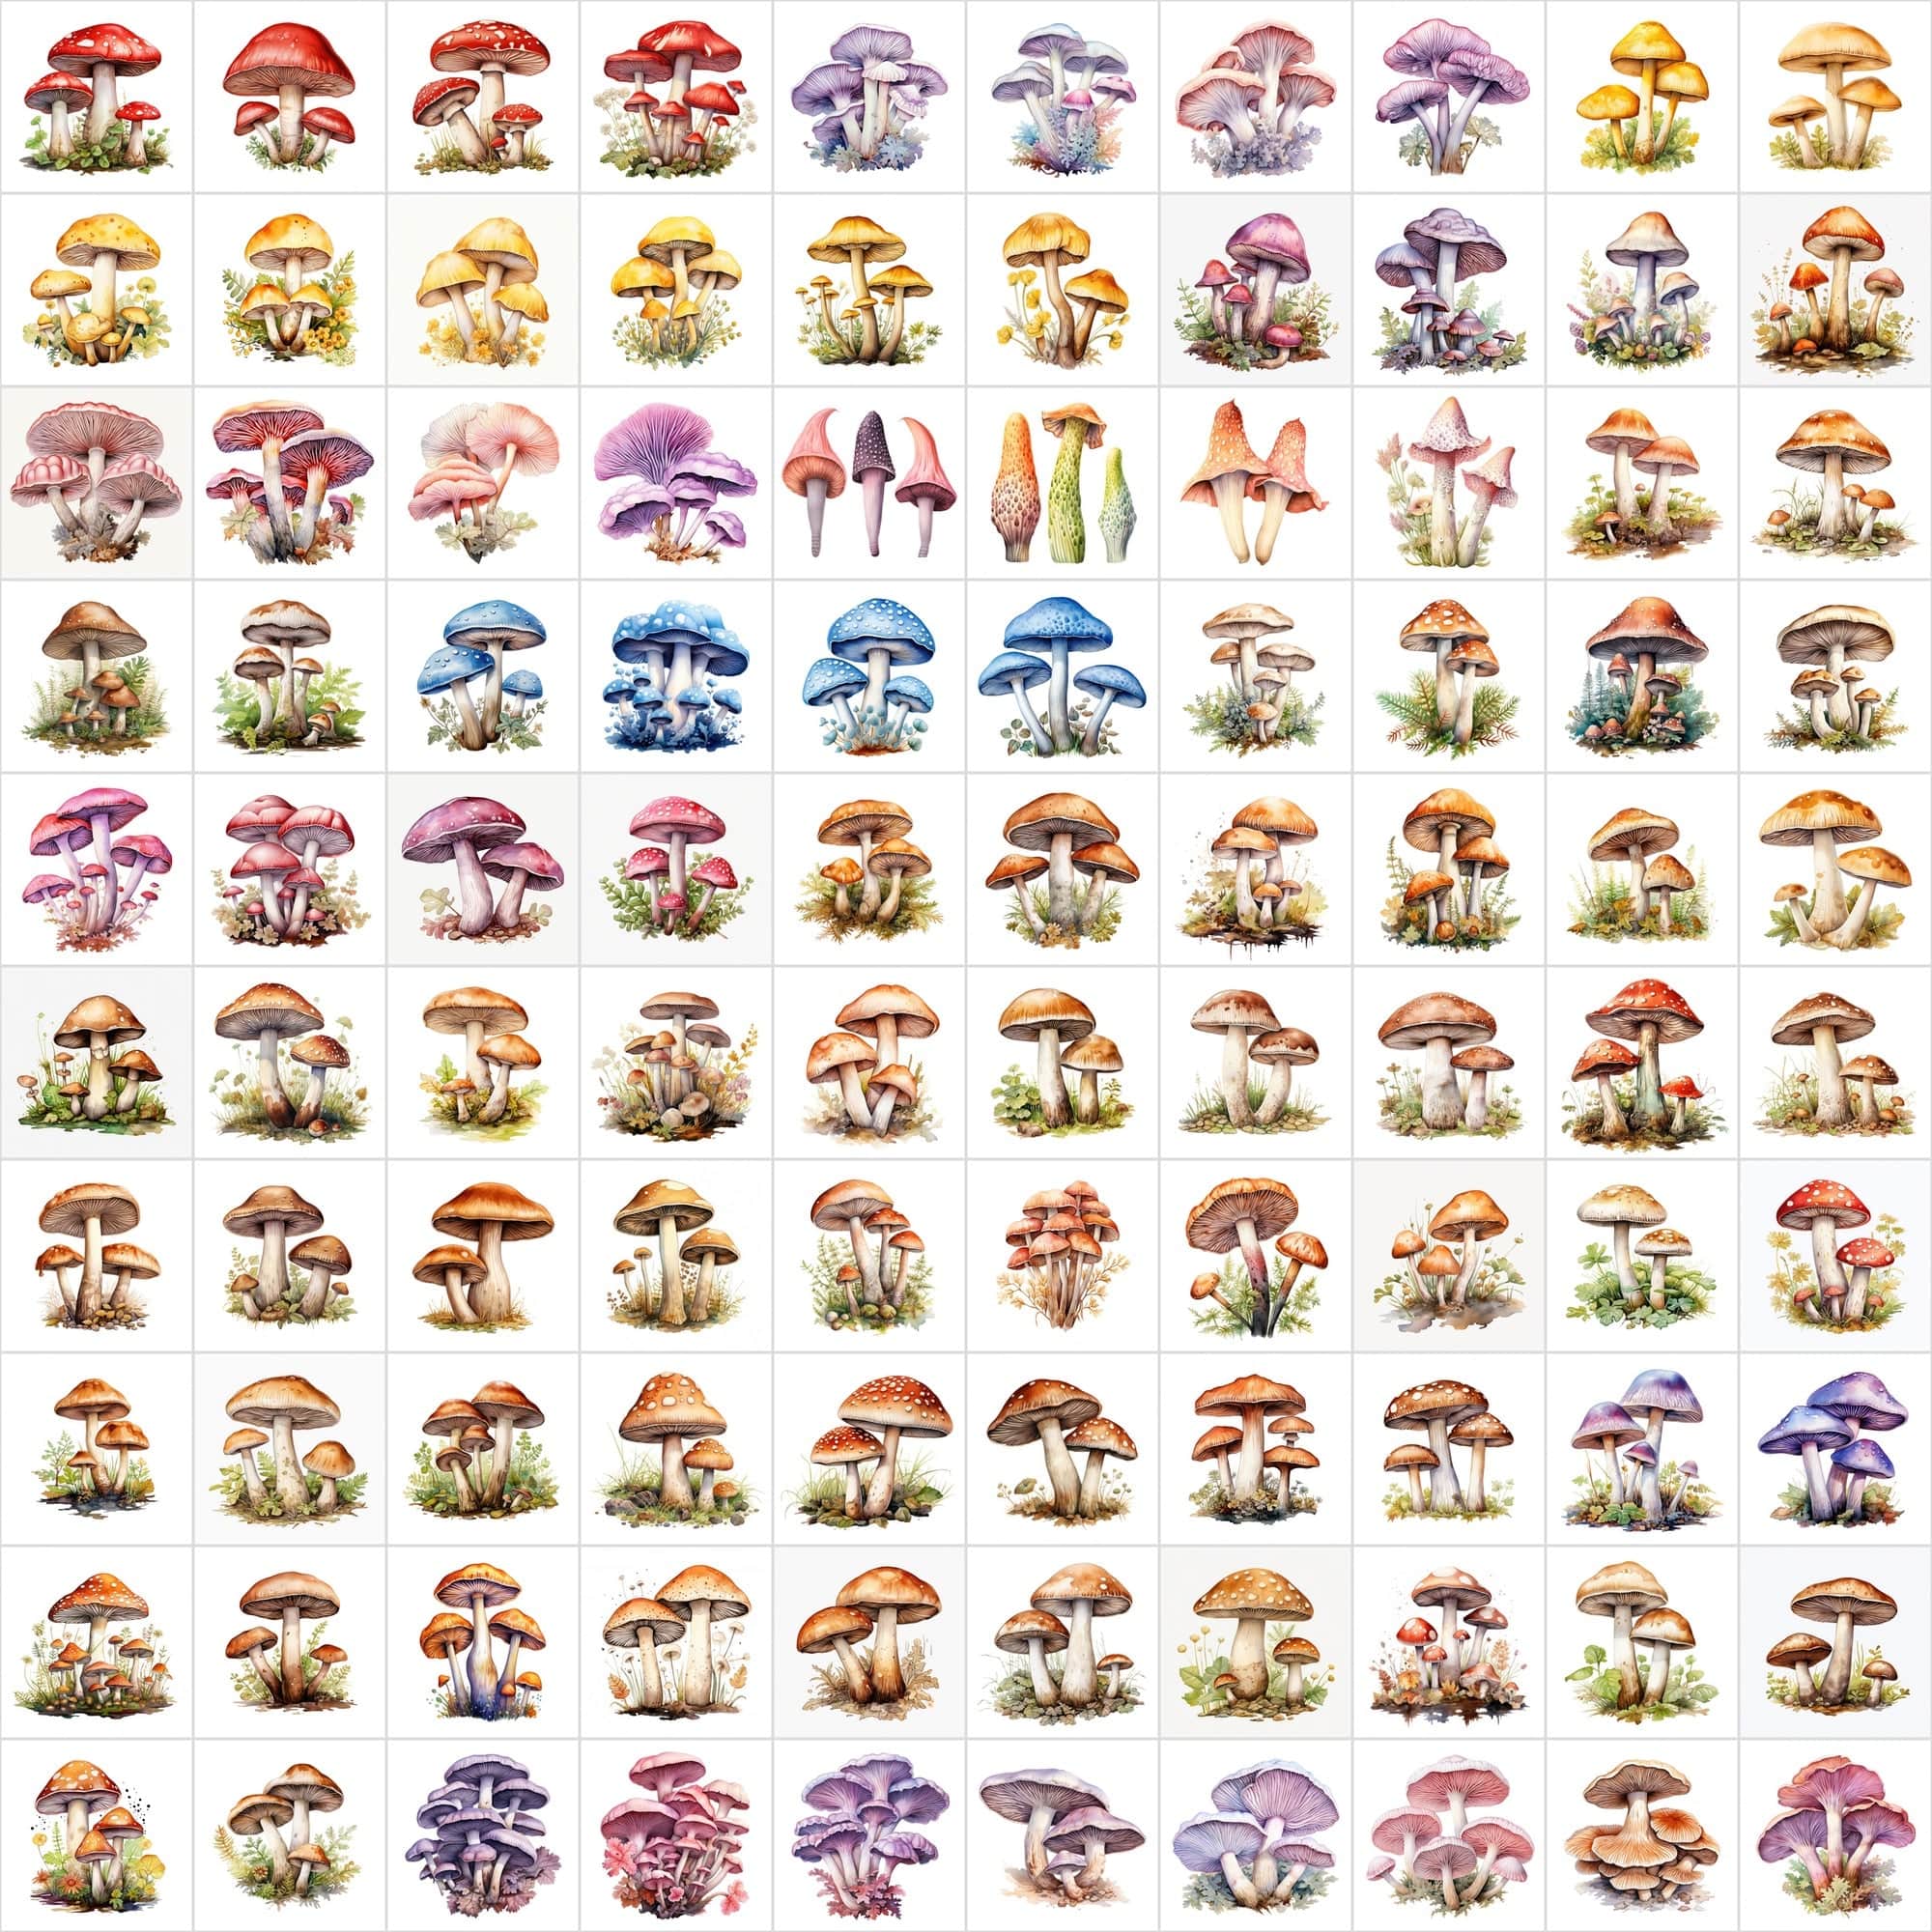 Watercolor Mushroom PNG Collection - 1170 Versatile Images with Commercial License, Transparent & White Backgrounds Digital Download Sumobundle